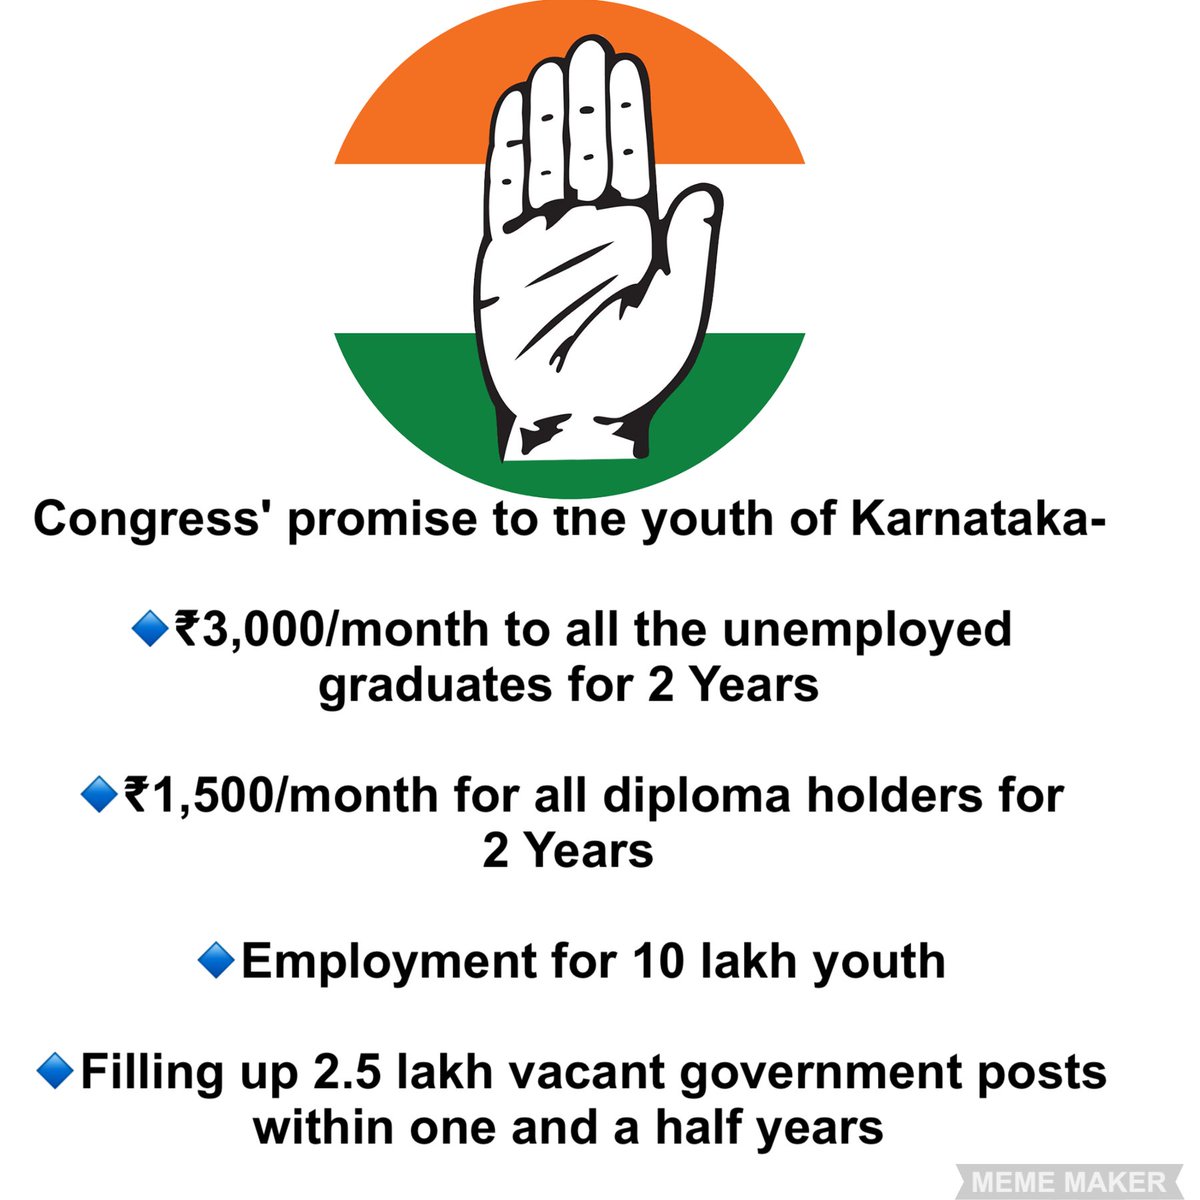 To the youth of Karnataka

#VoteForCongress and get employed. Secure your and Karnataka's future. 

#KarnatakaWantsCongress